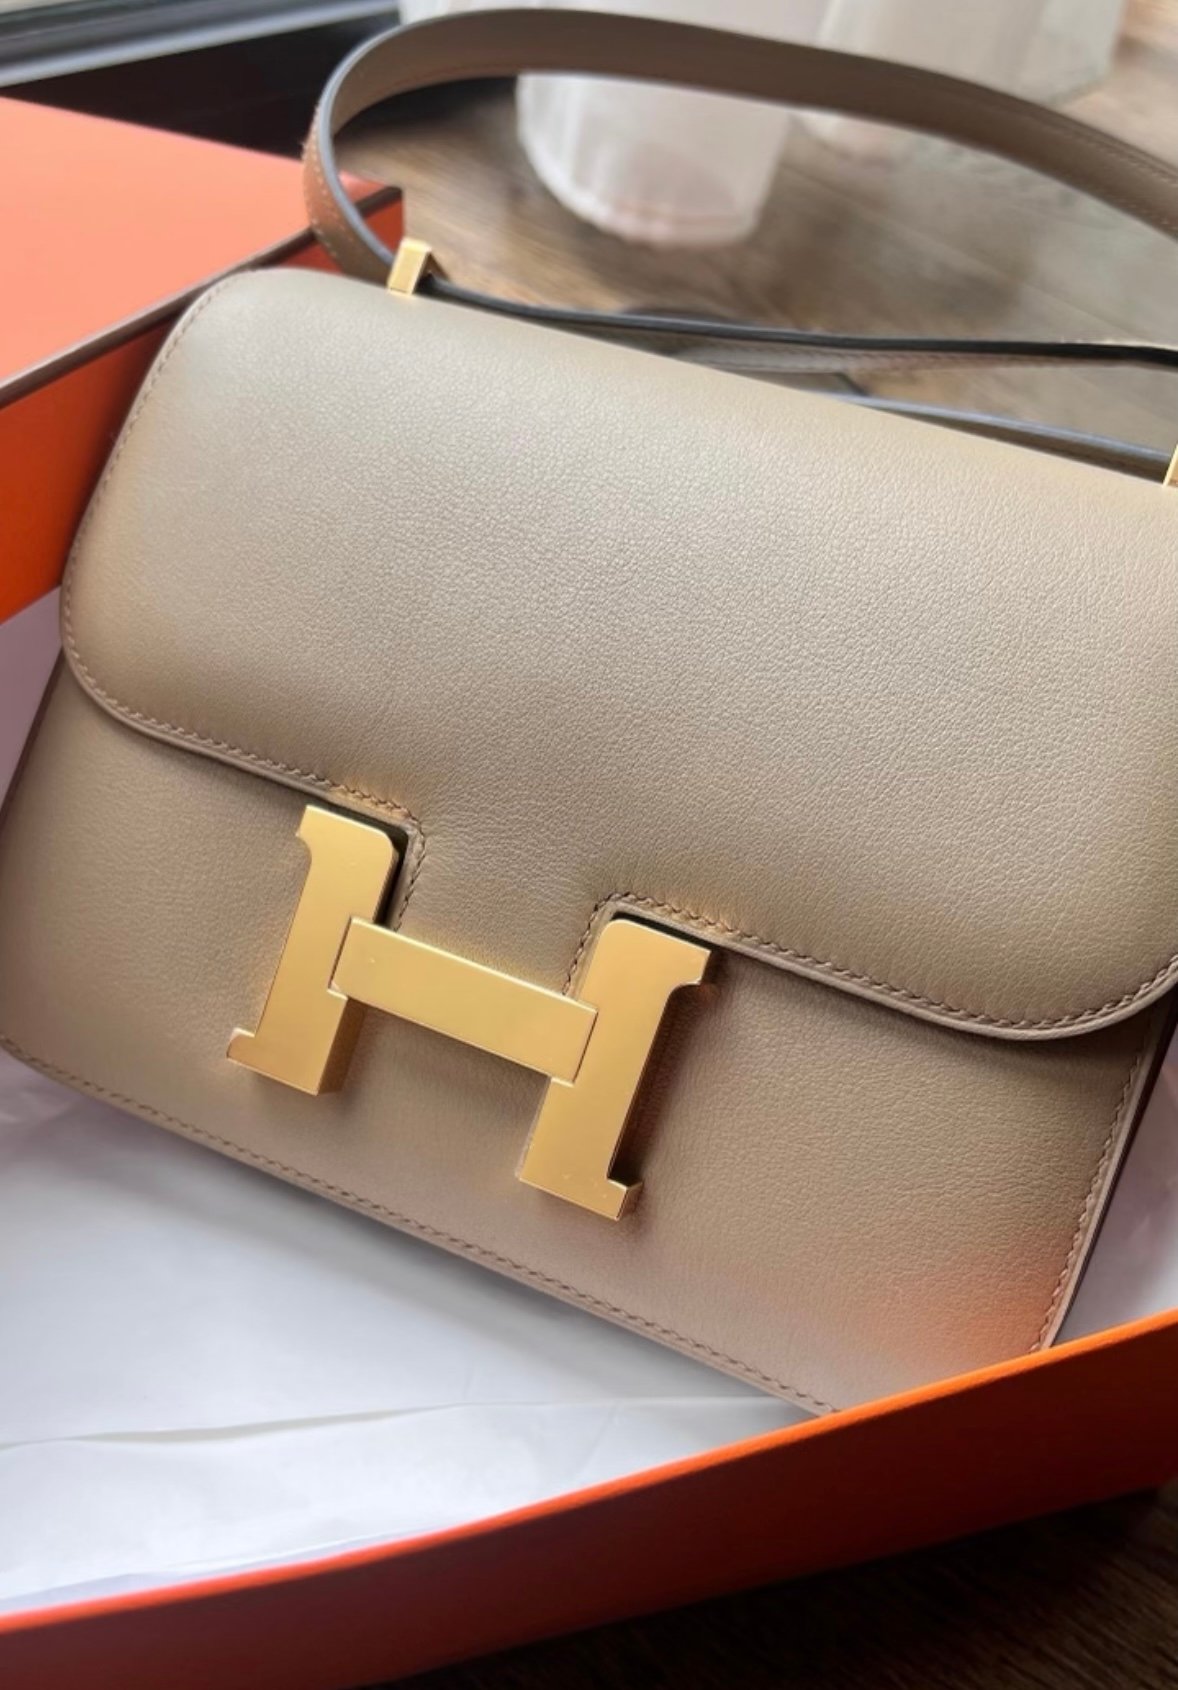 Hermès latest bag colours revealed - Still in fashion